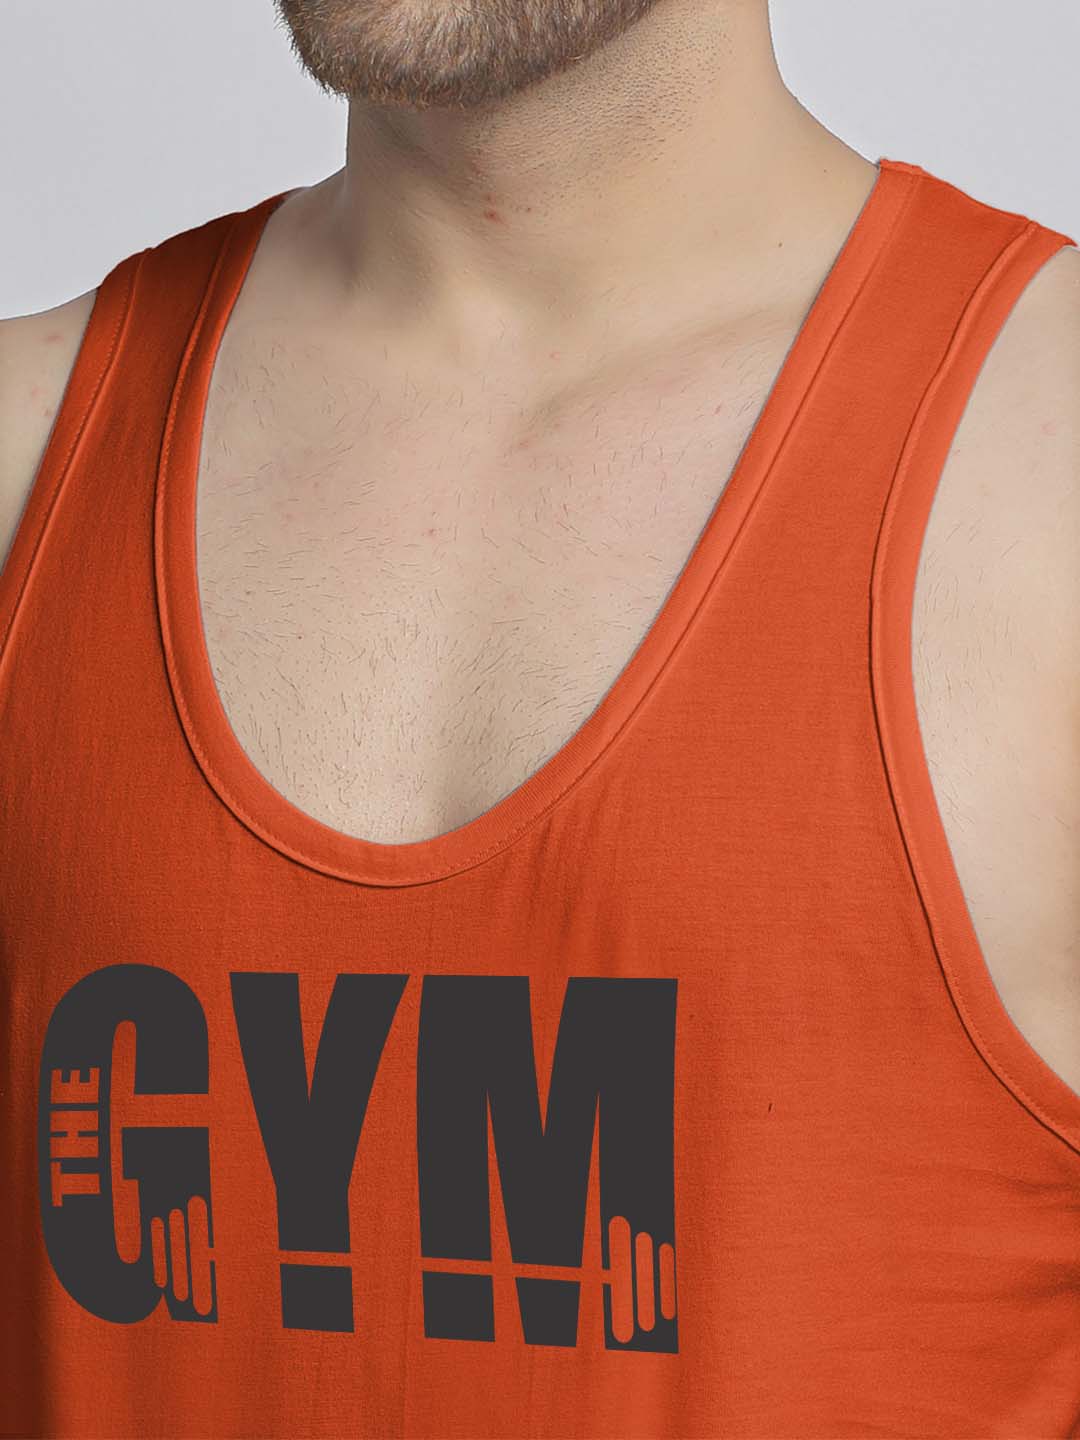 Mens's Gym Printed Innerwear Gym Vest - Friskers